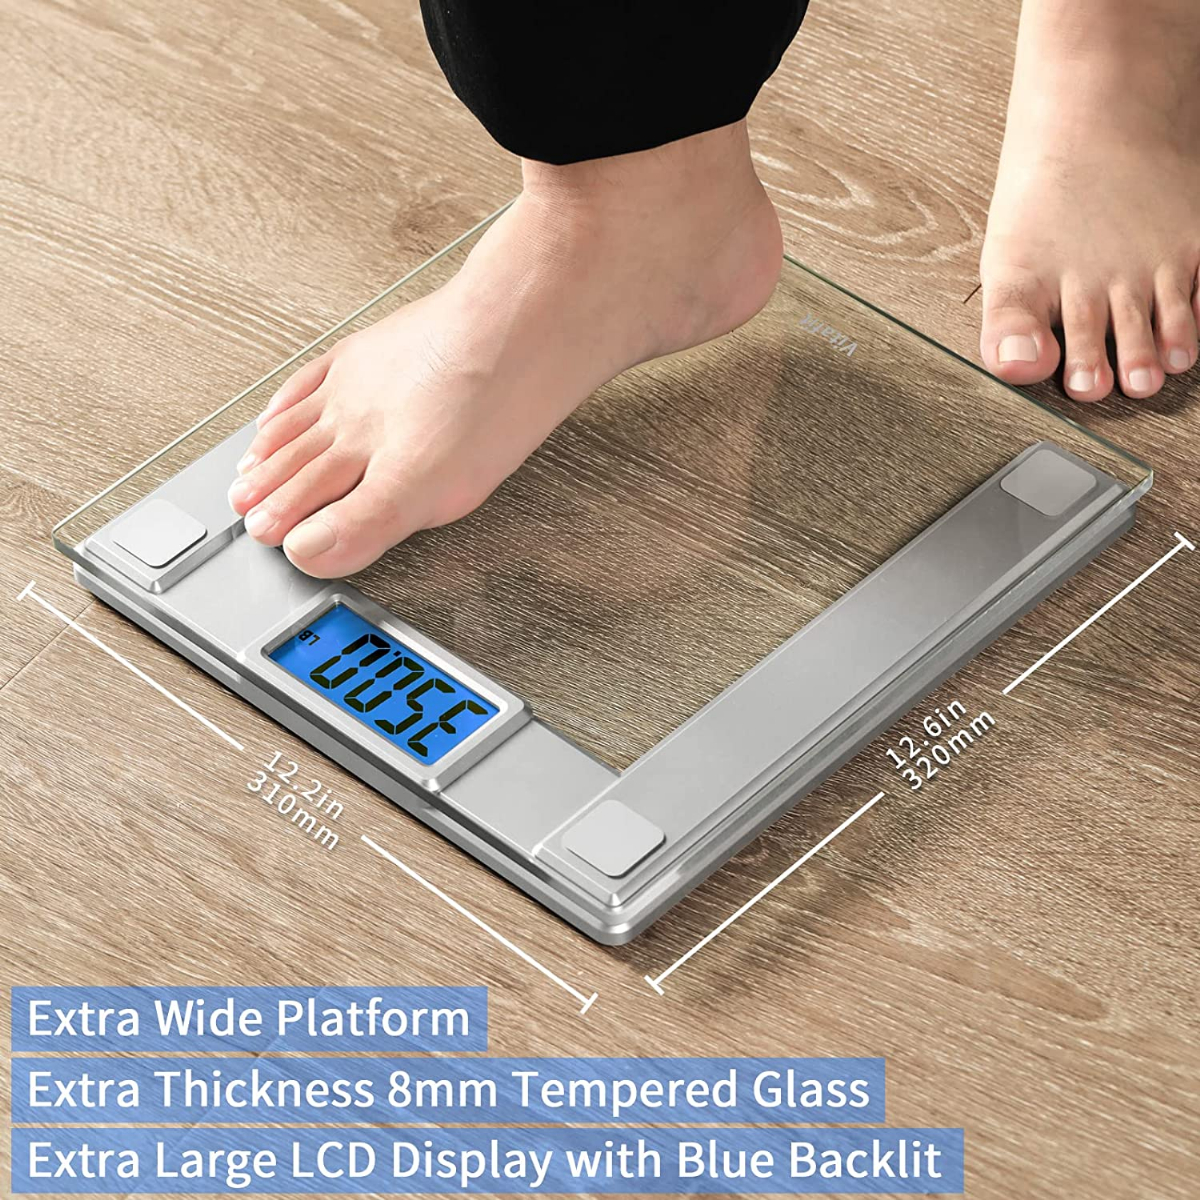 Vitafit Digital Body Weight Bathroom Scale, Over 20Years Scale